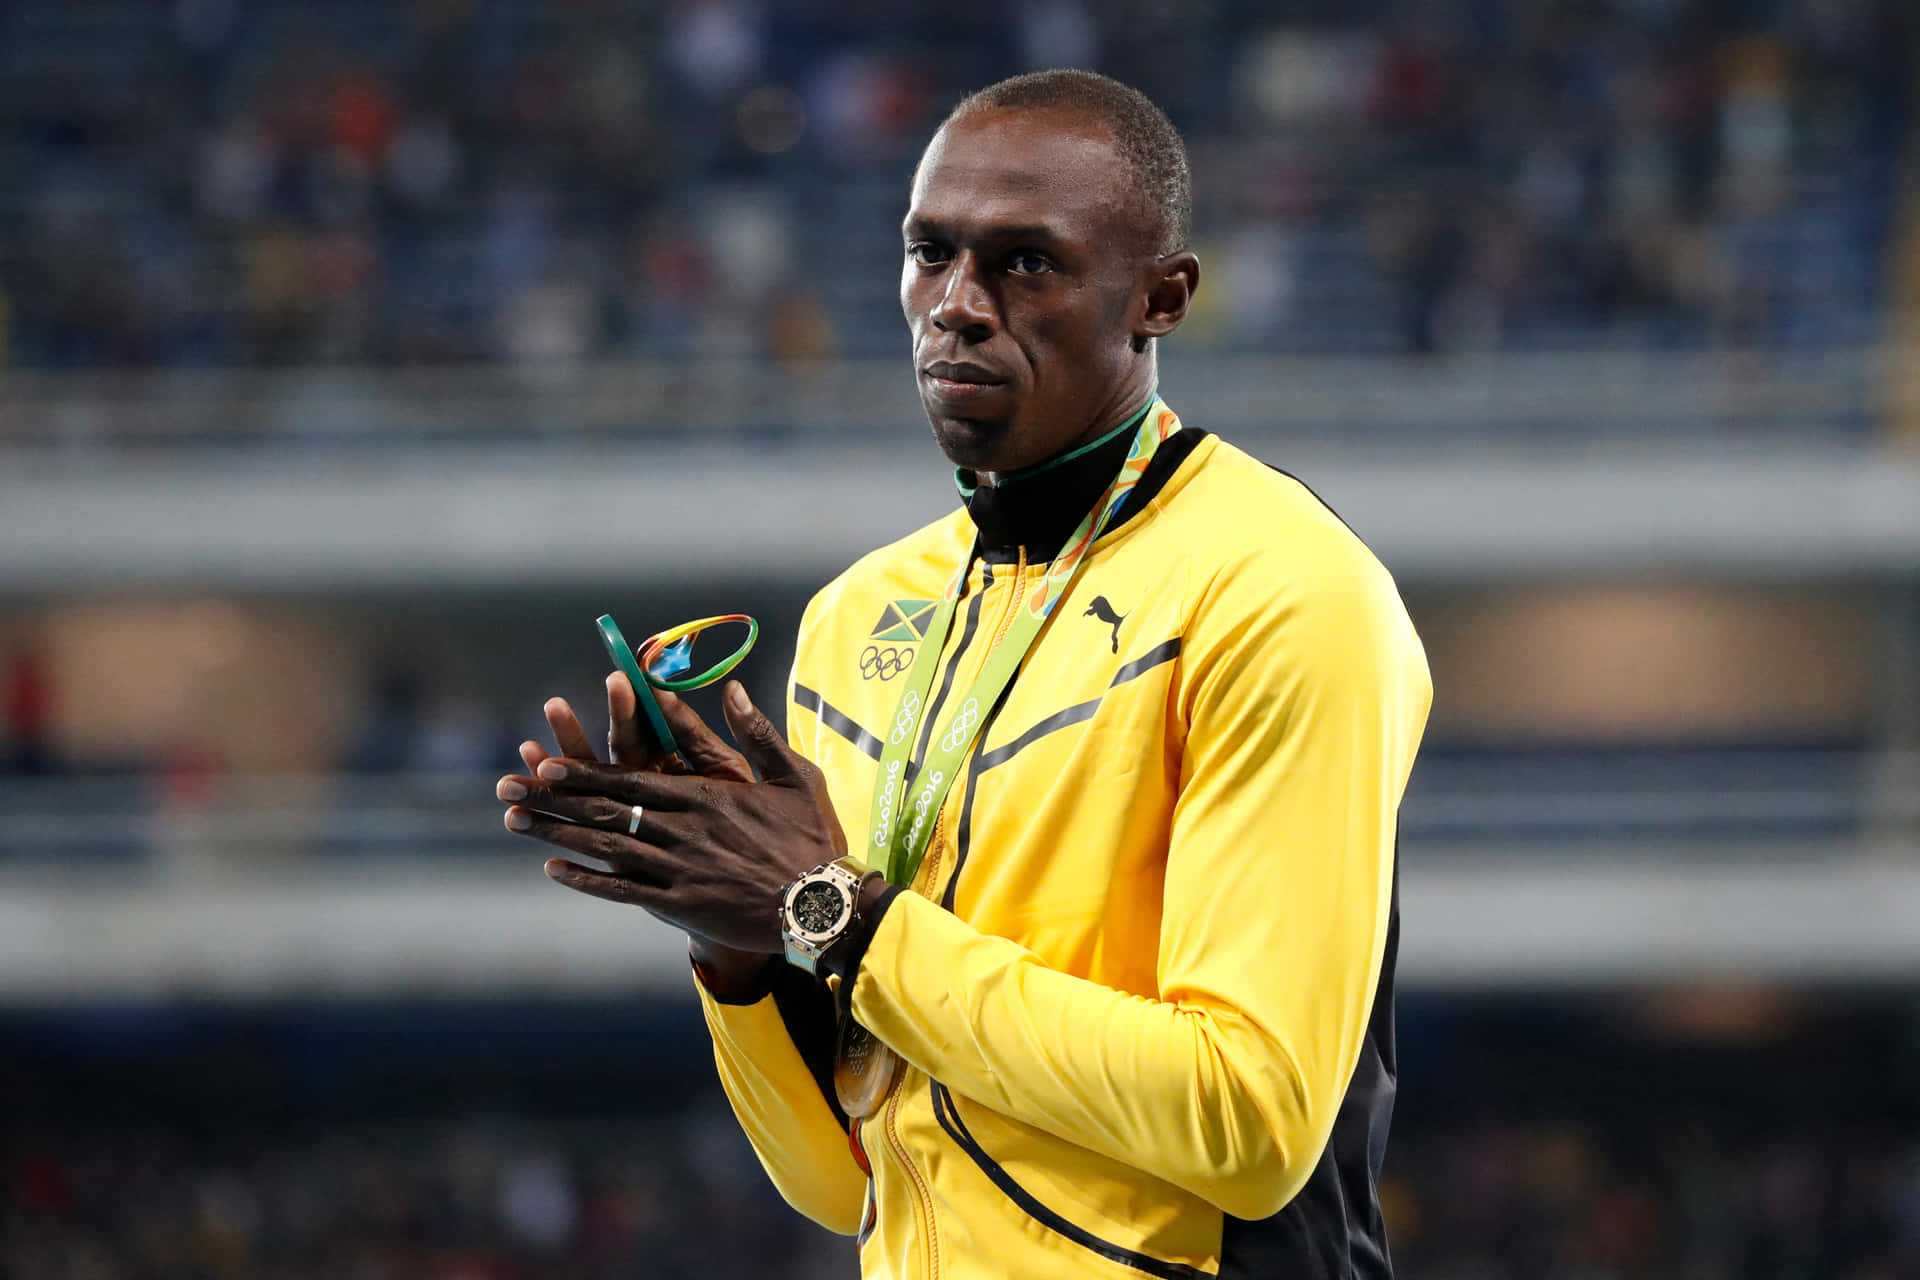 Atletausain Bolt Vistiendo Amarillo Fondo de pantalla